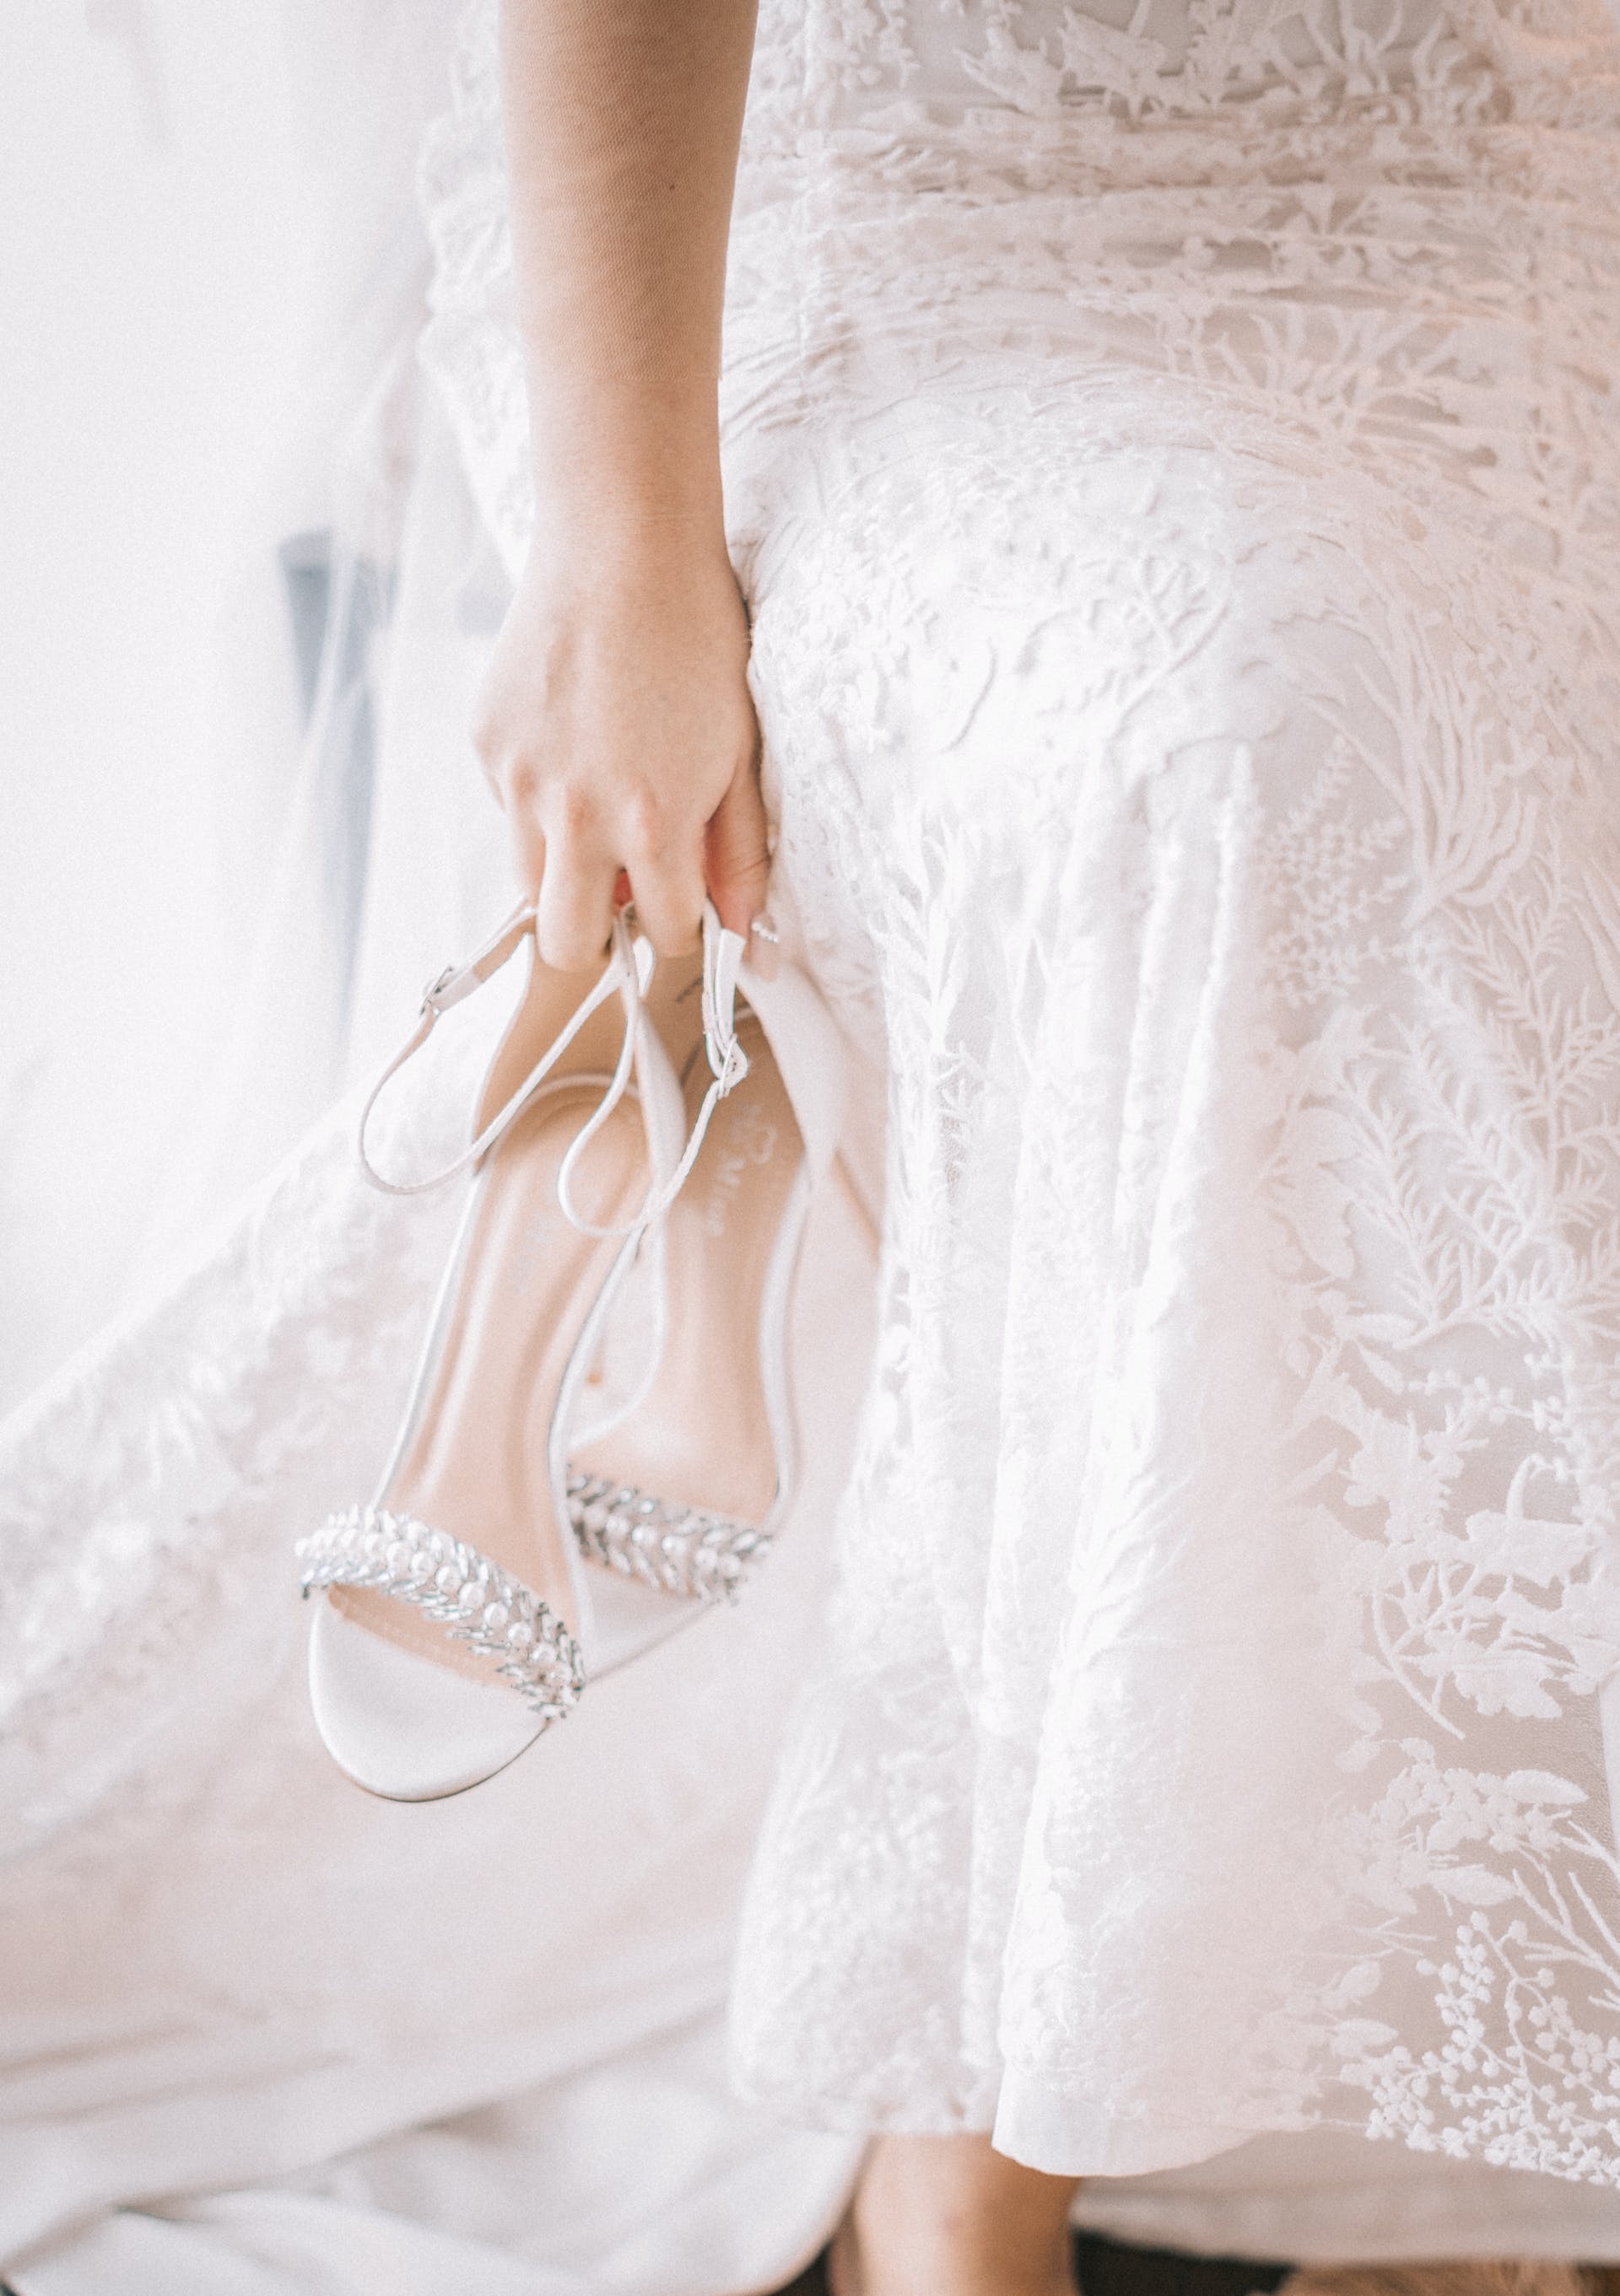 La mariée tenant ses chaussures | Source : Pexels